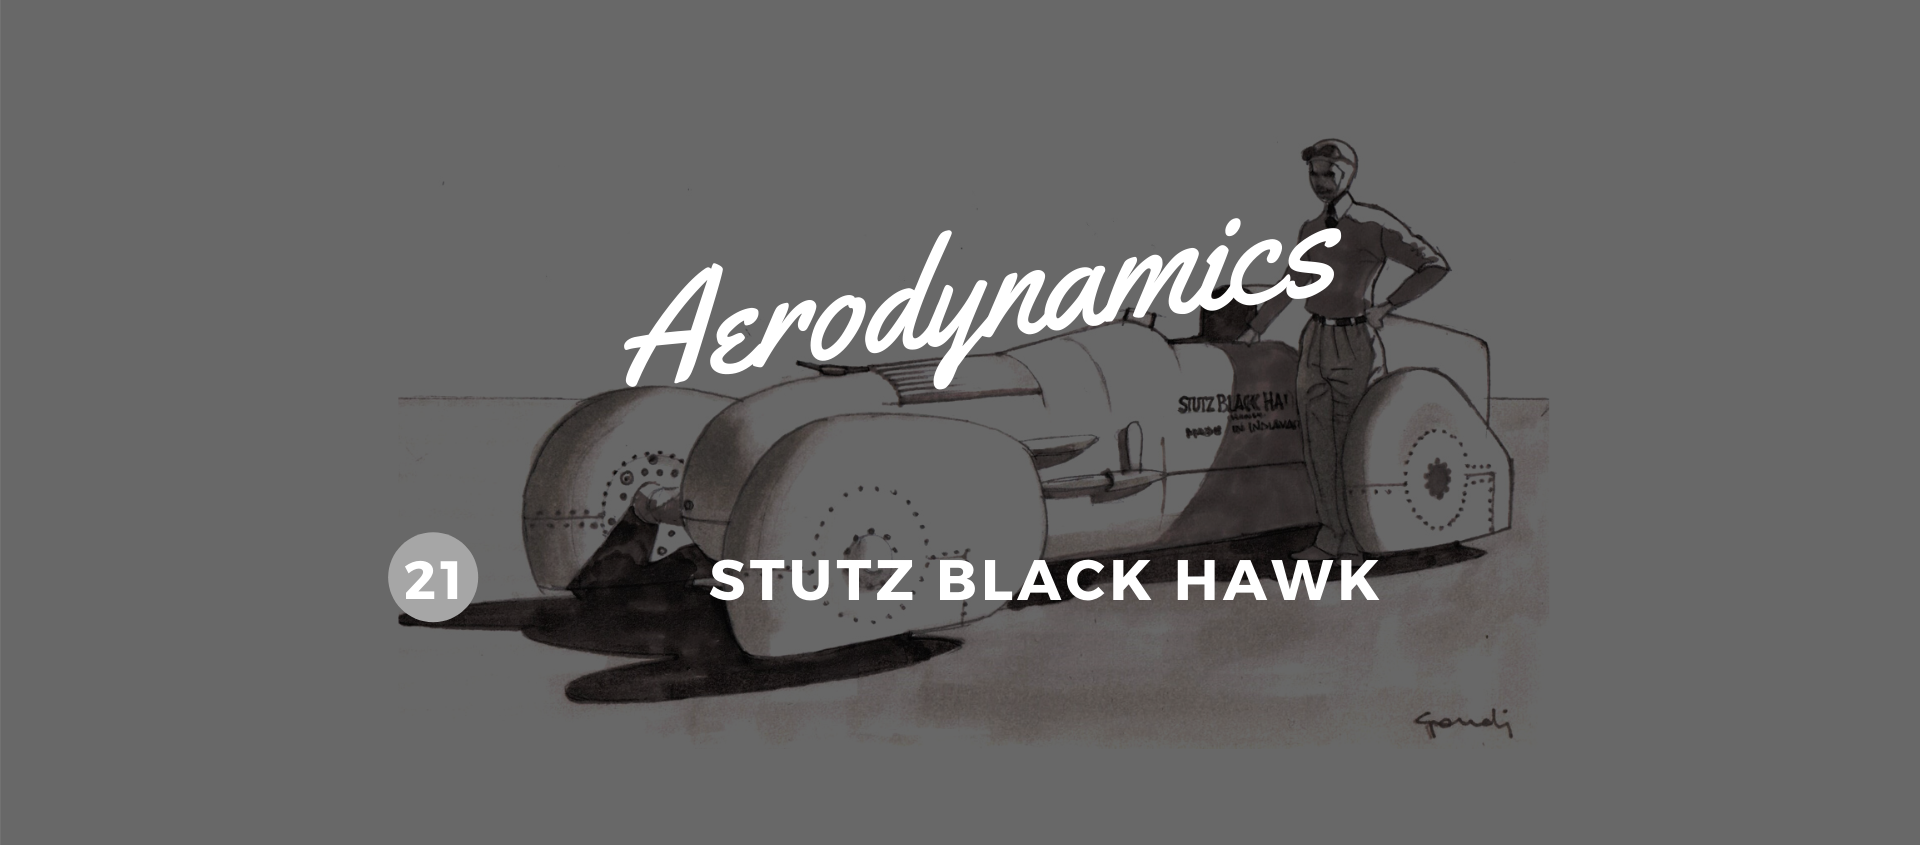 1927. Stutz “Black Hawk". The day the white hawk turned black